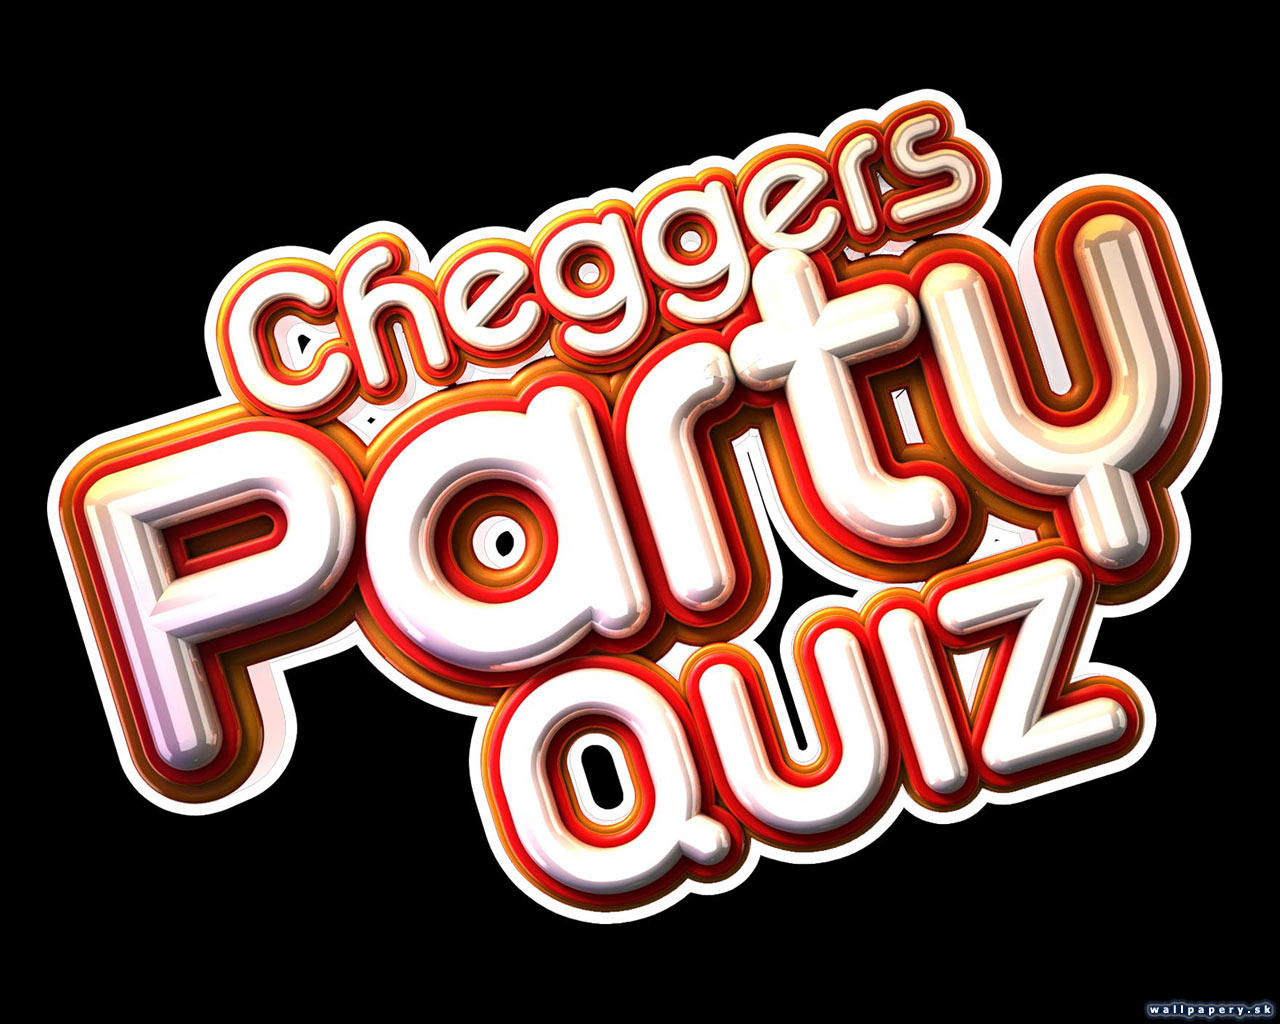 Cheggers' Party Quiz - wallpaper 6